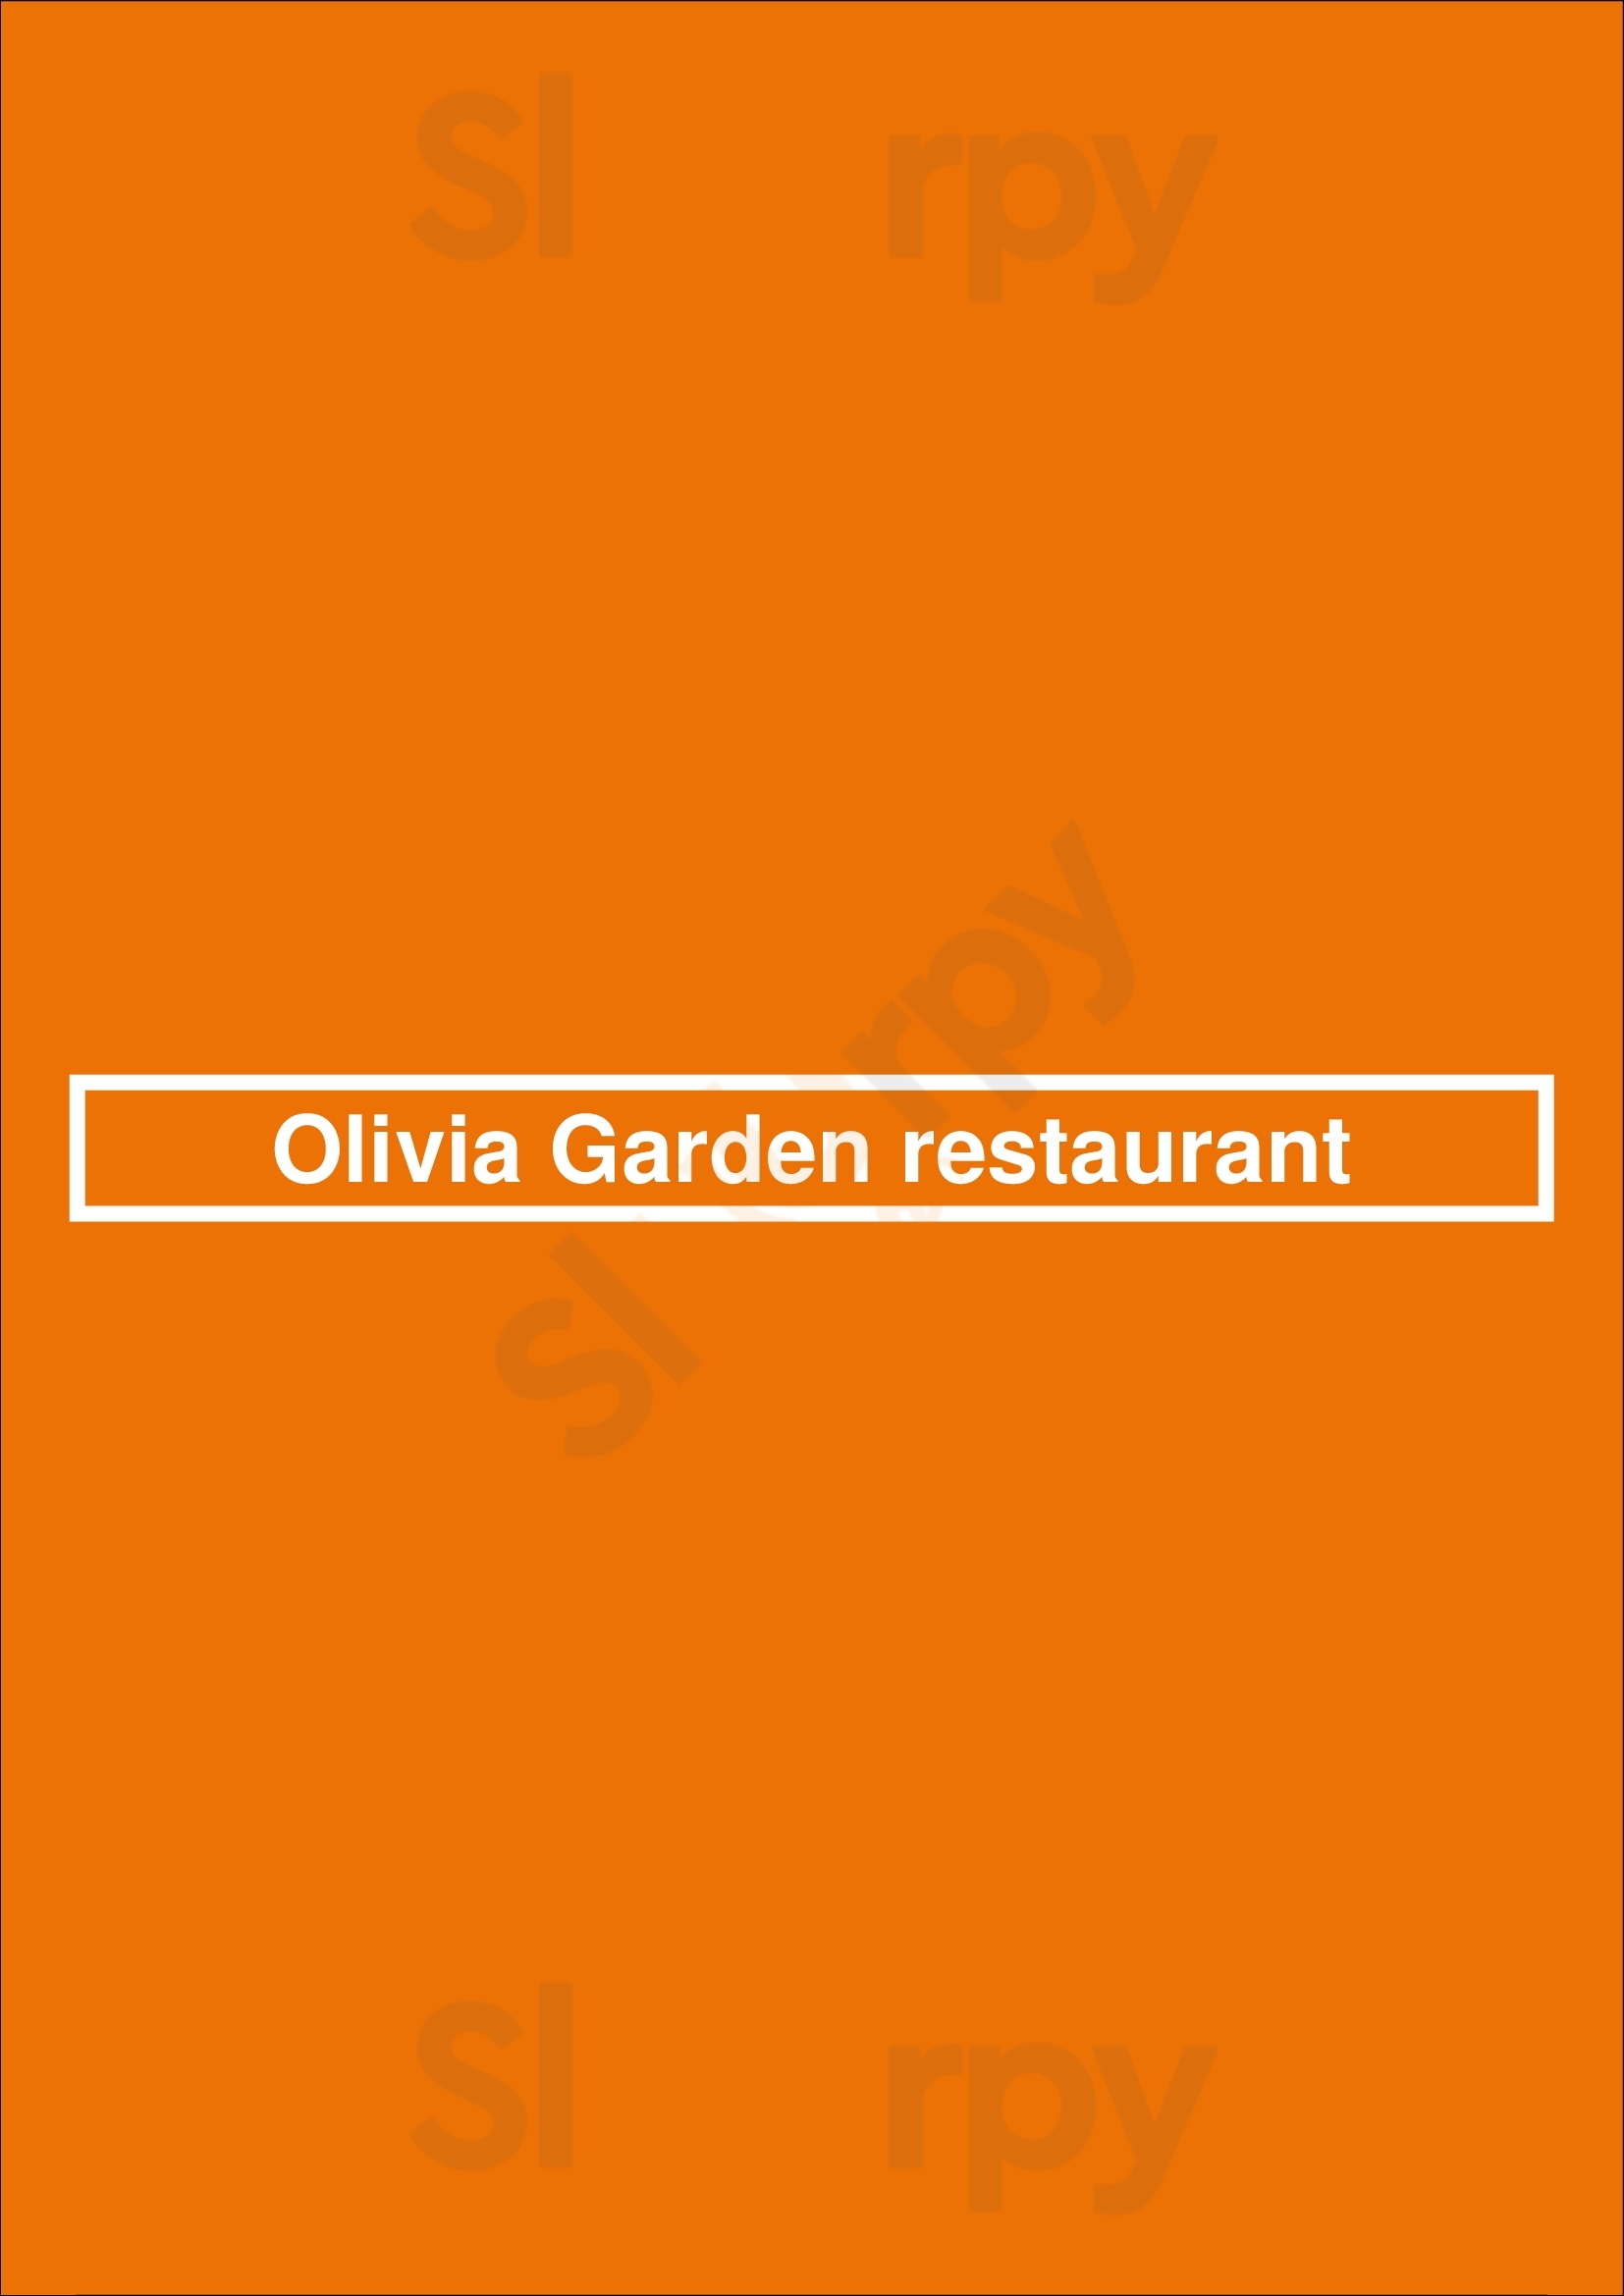 Olivia Garden Restaurant Barcelona Menu - 1